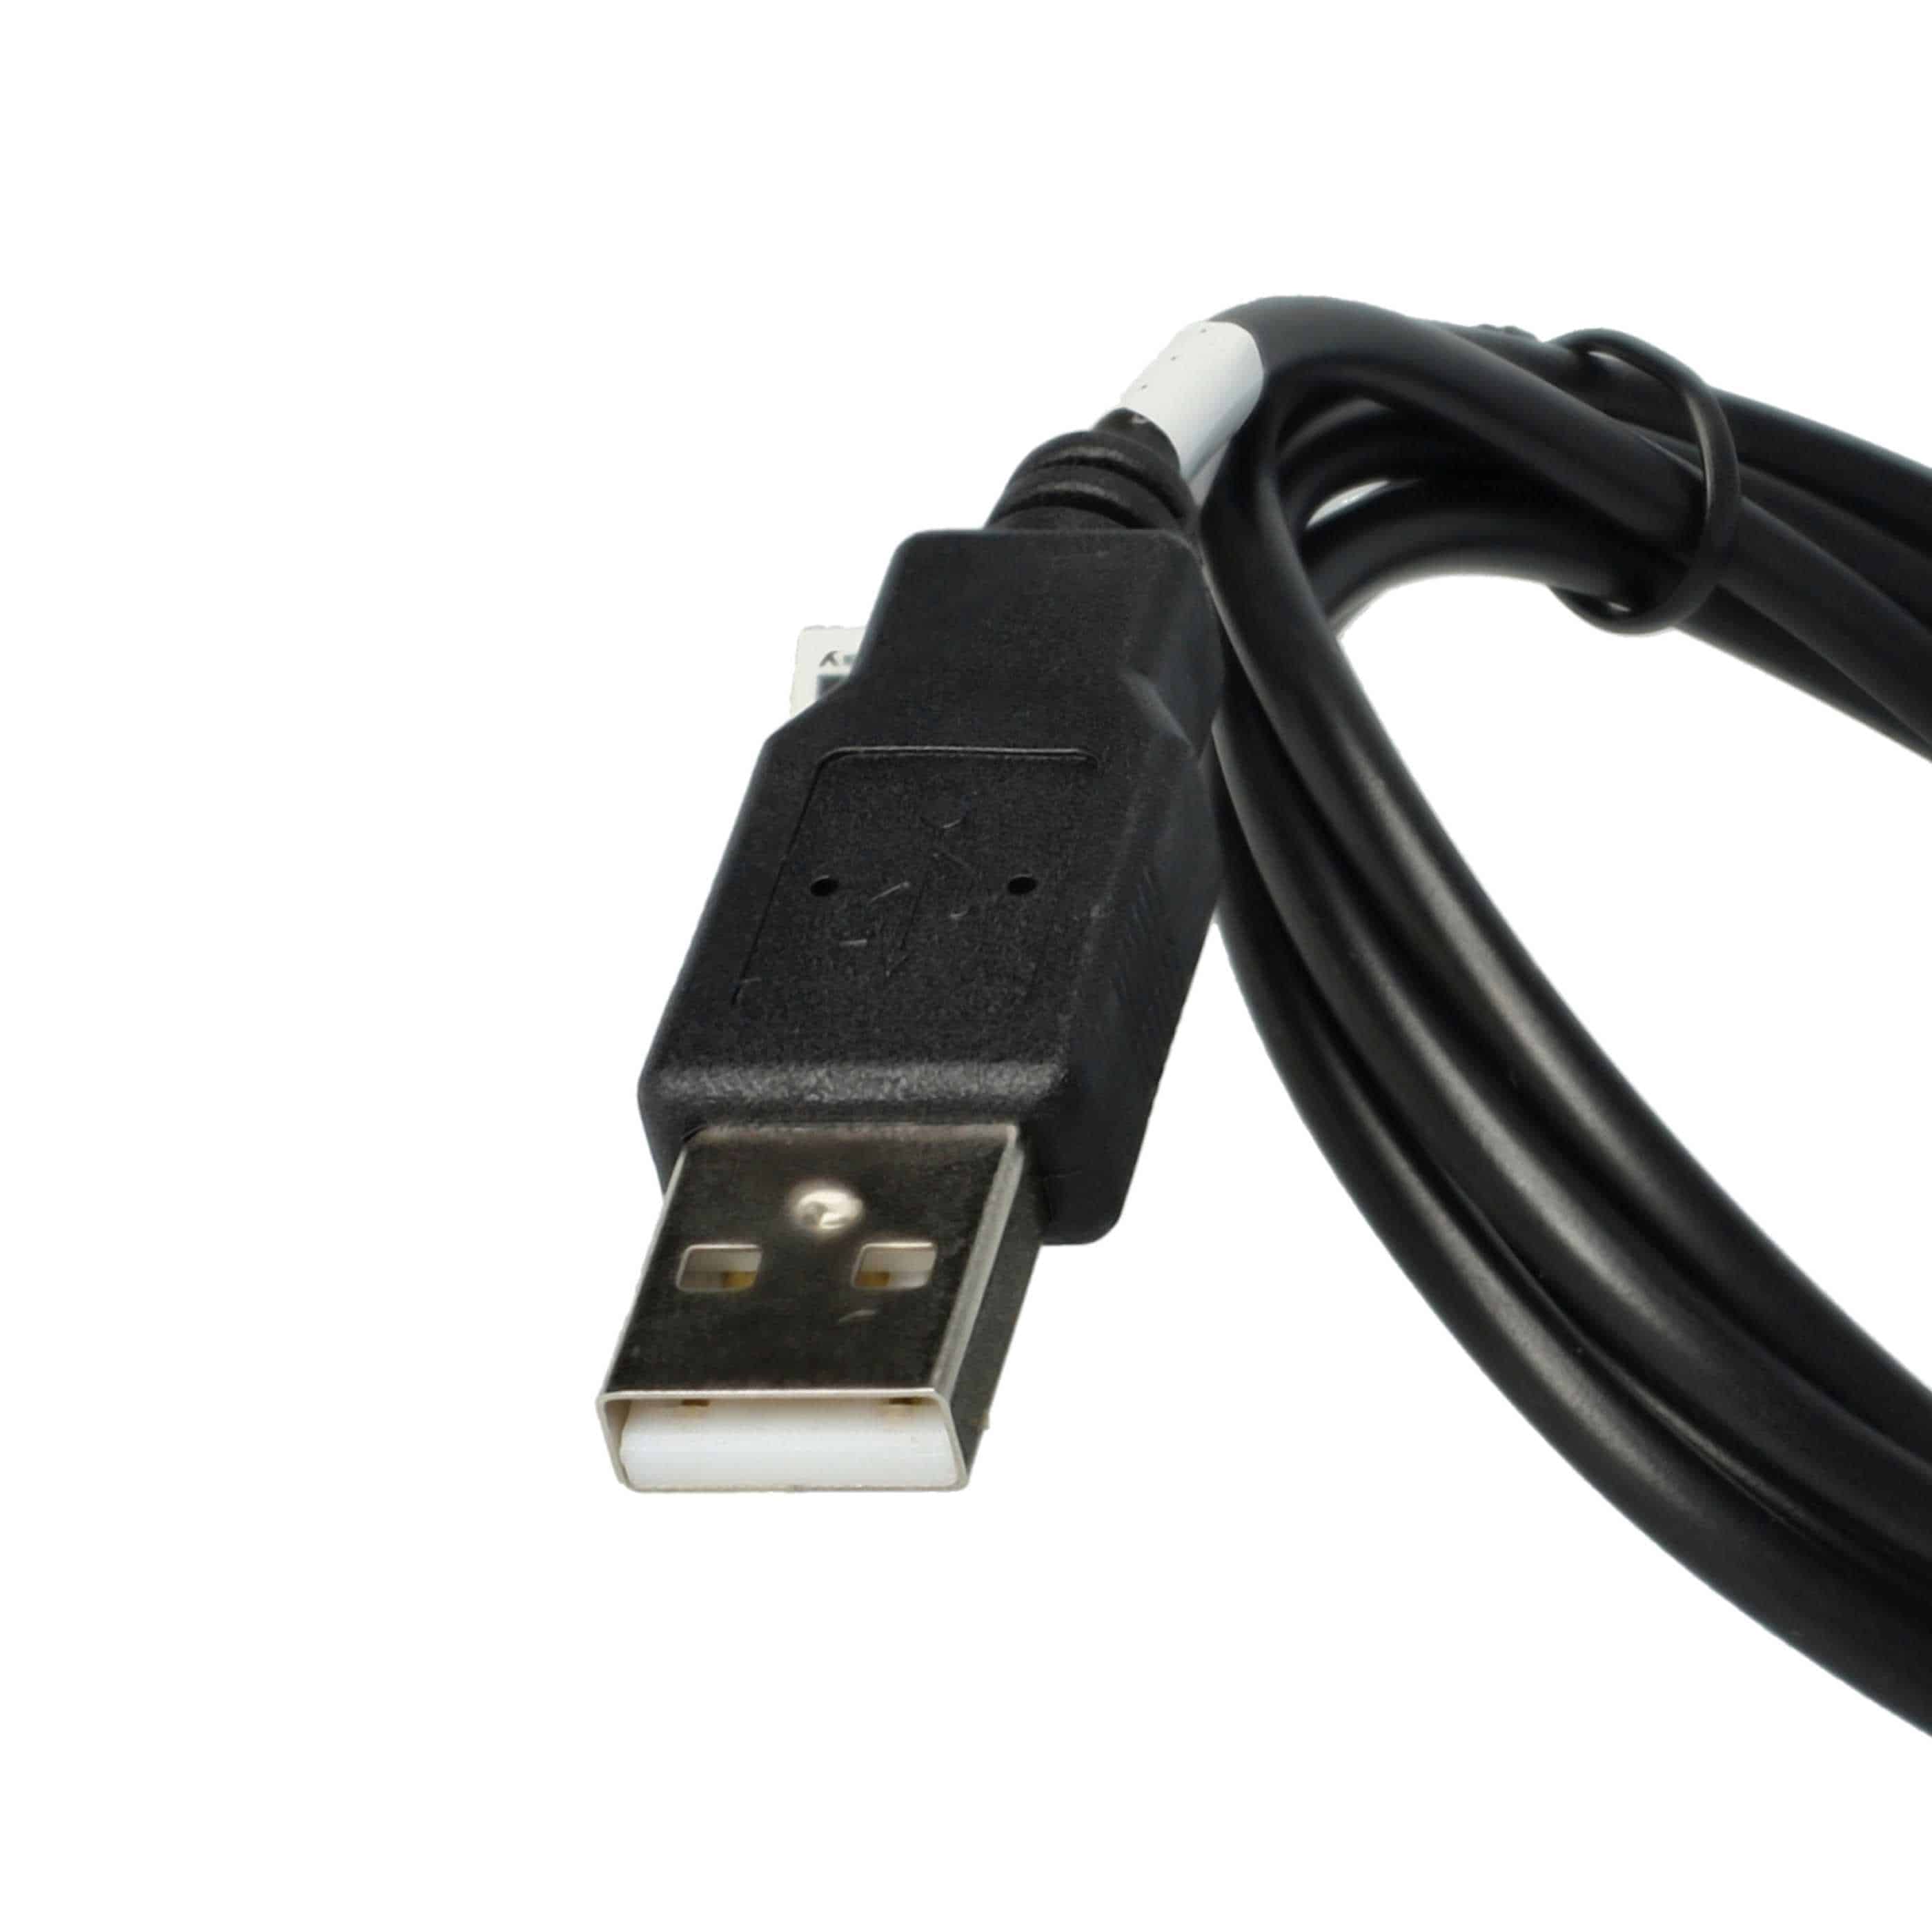 Cable datos USB cable carga (2 en 1) universal todos los navegadores, GPS - 100cm negro